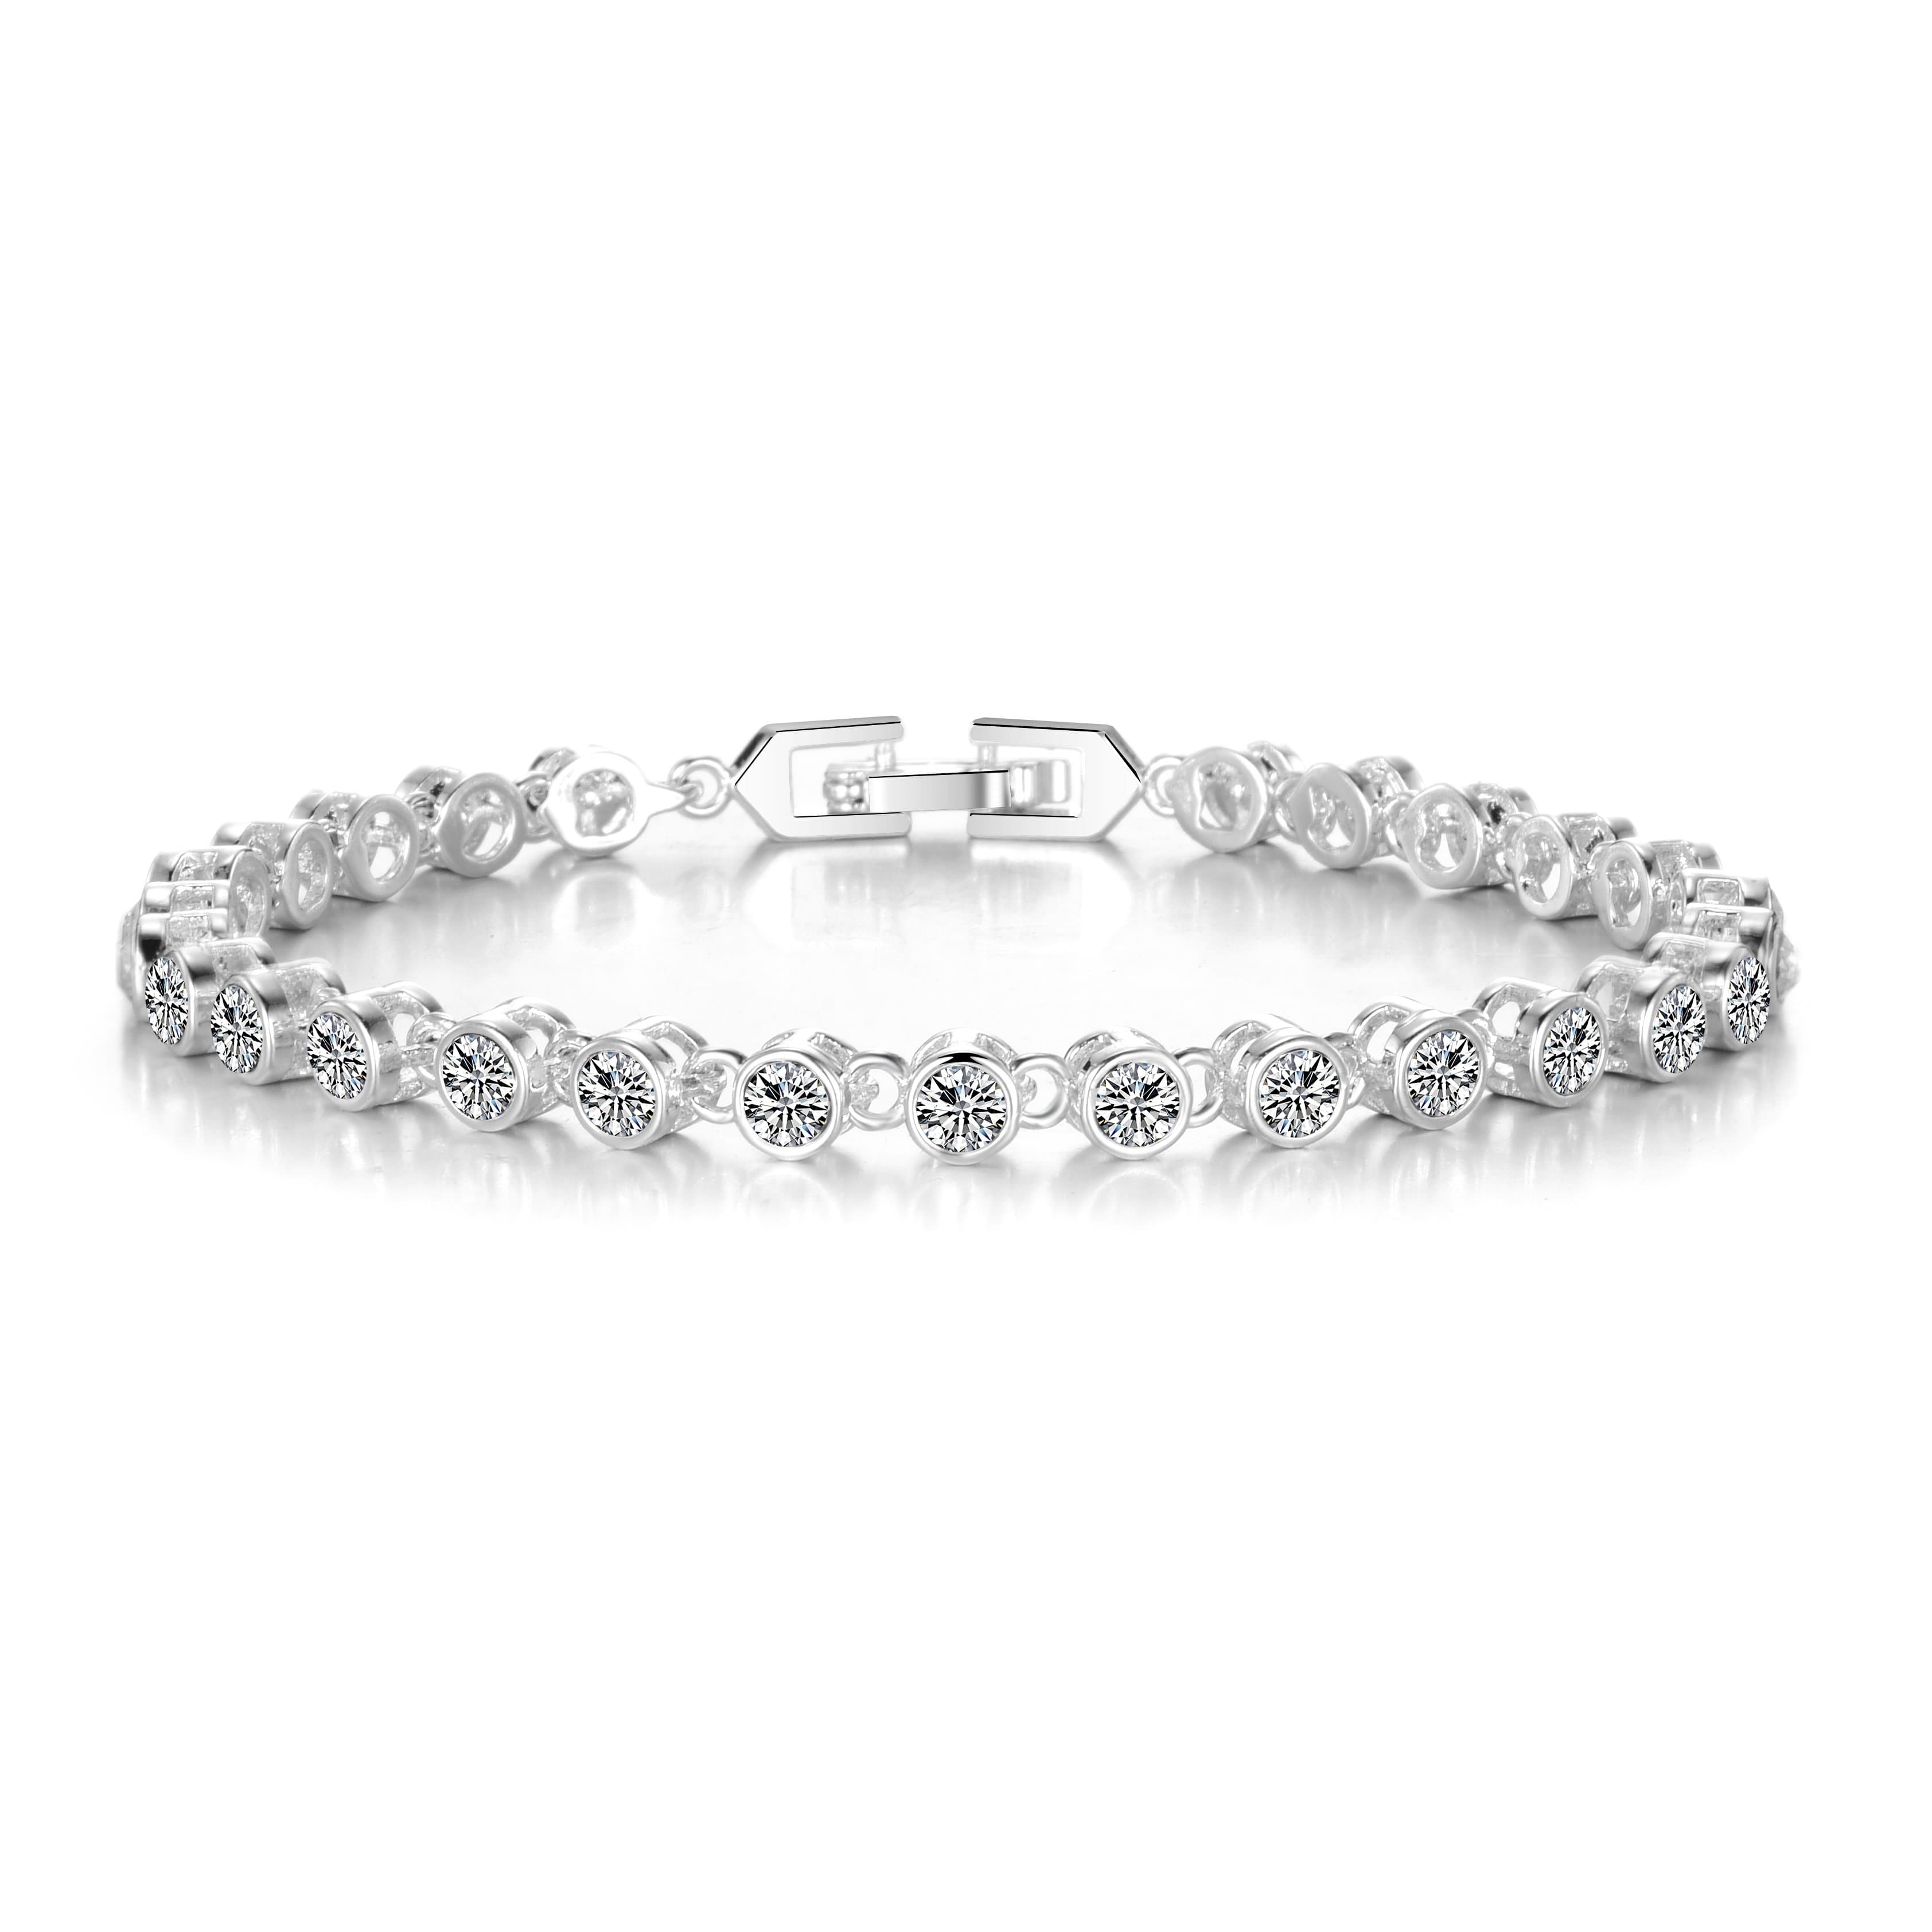 Solitaire Bracelet Created with Zircondia® Crystals by Philip Jones Jewellery